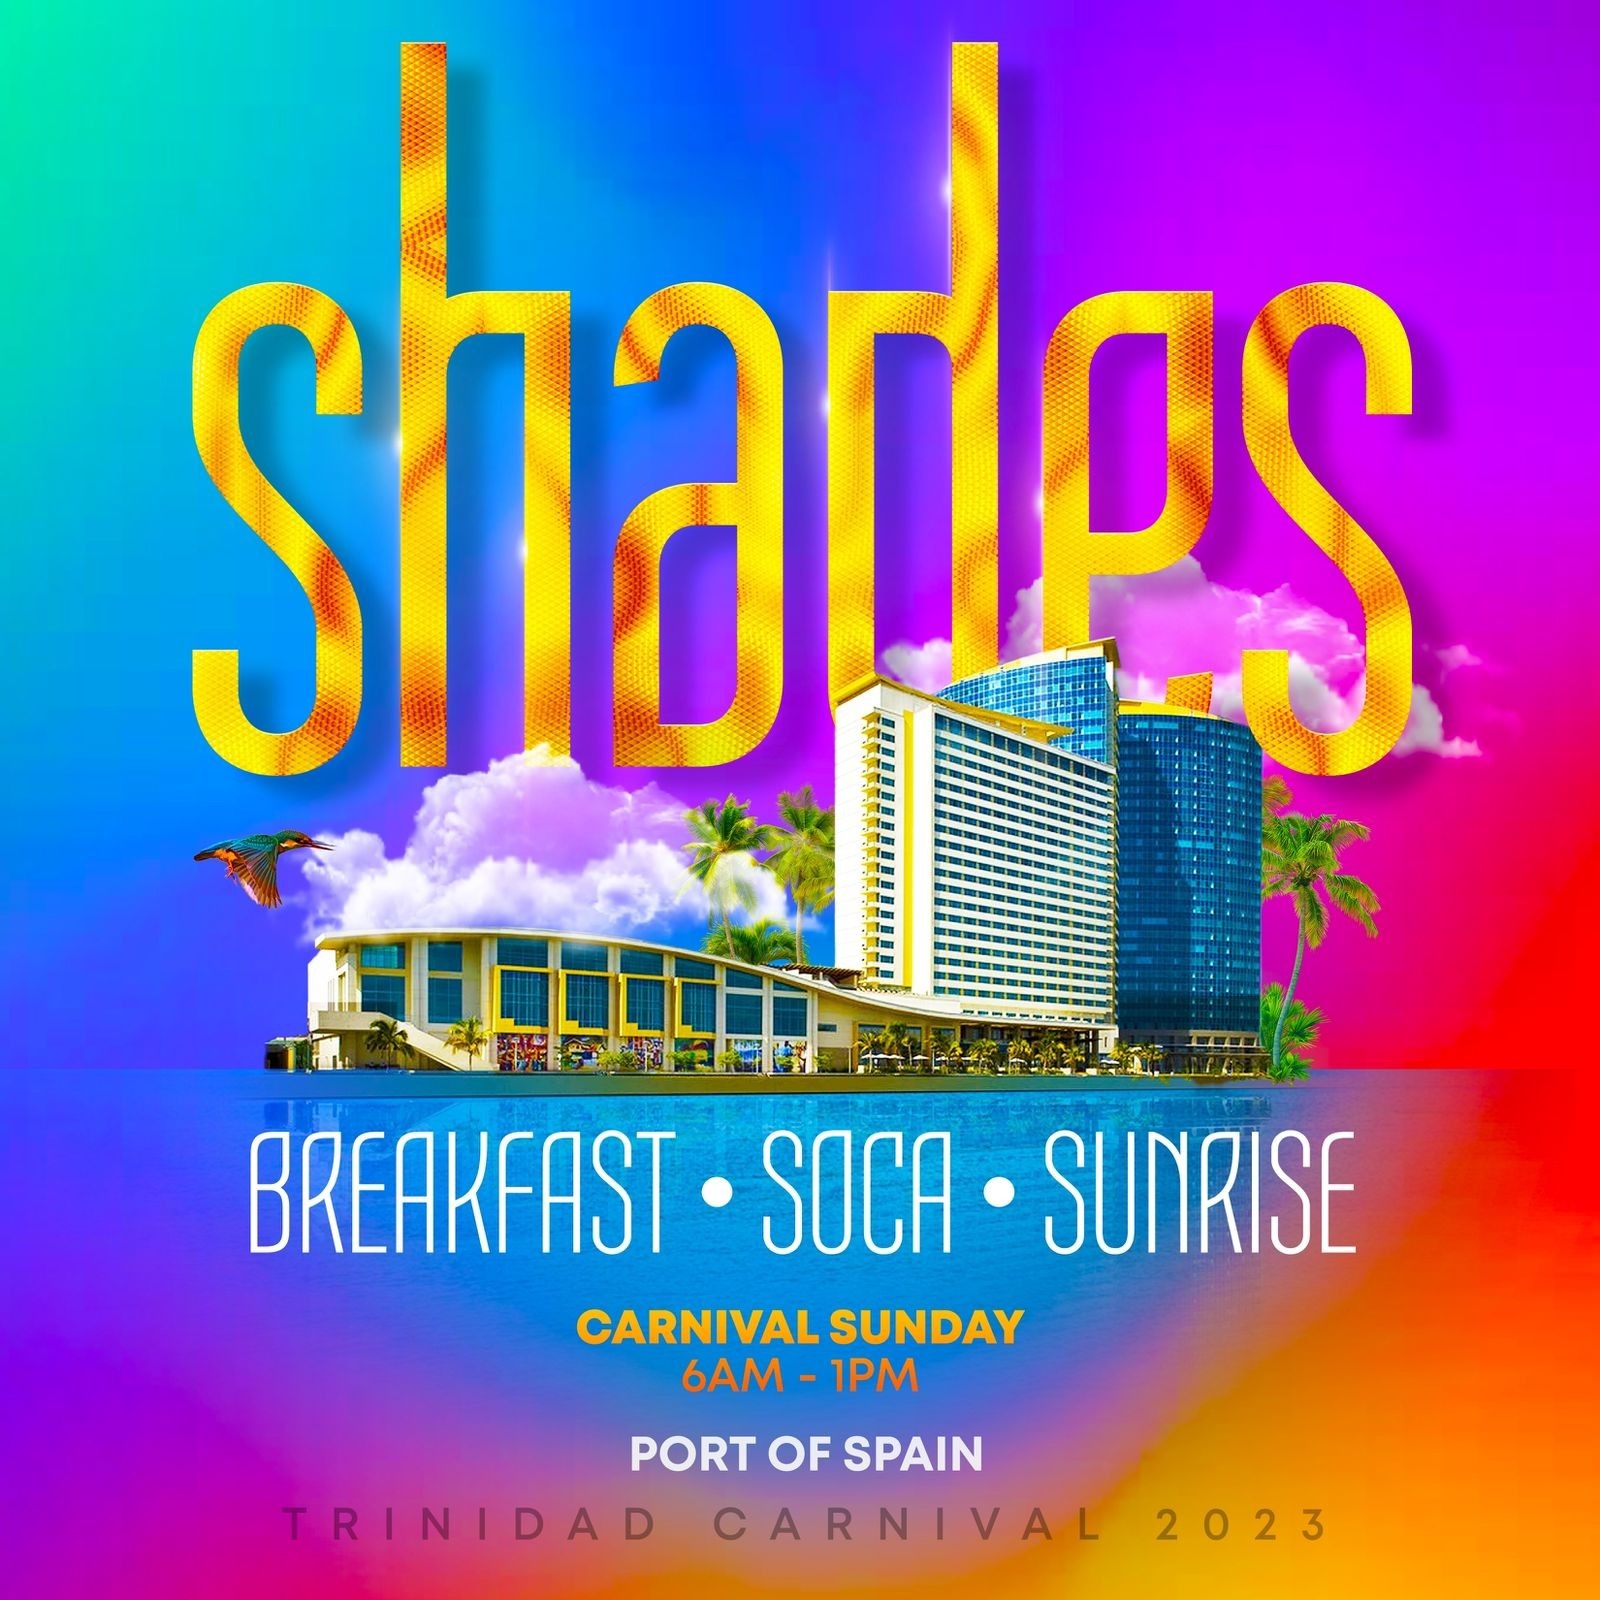 Shades Breakfast 2023 